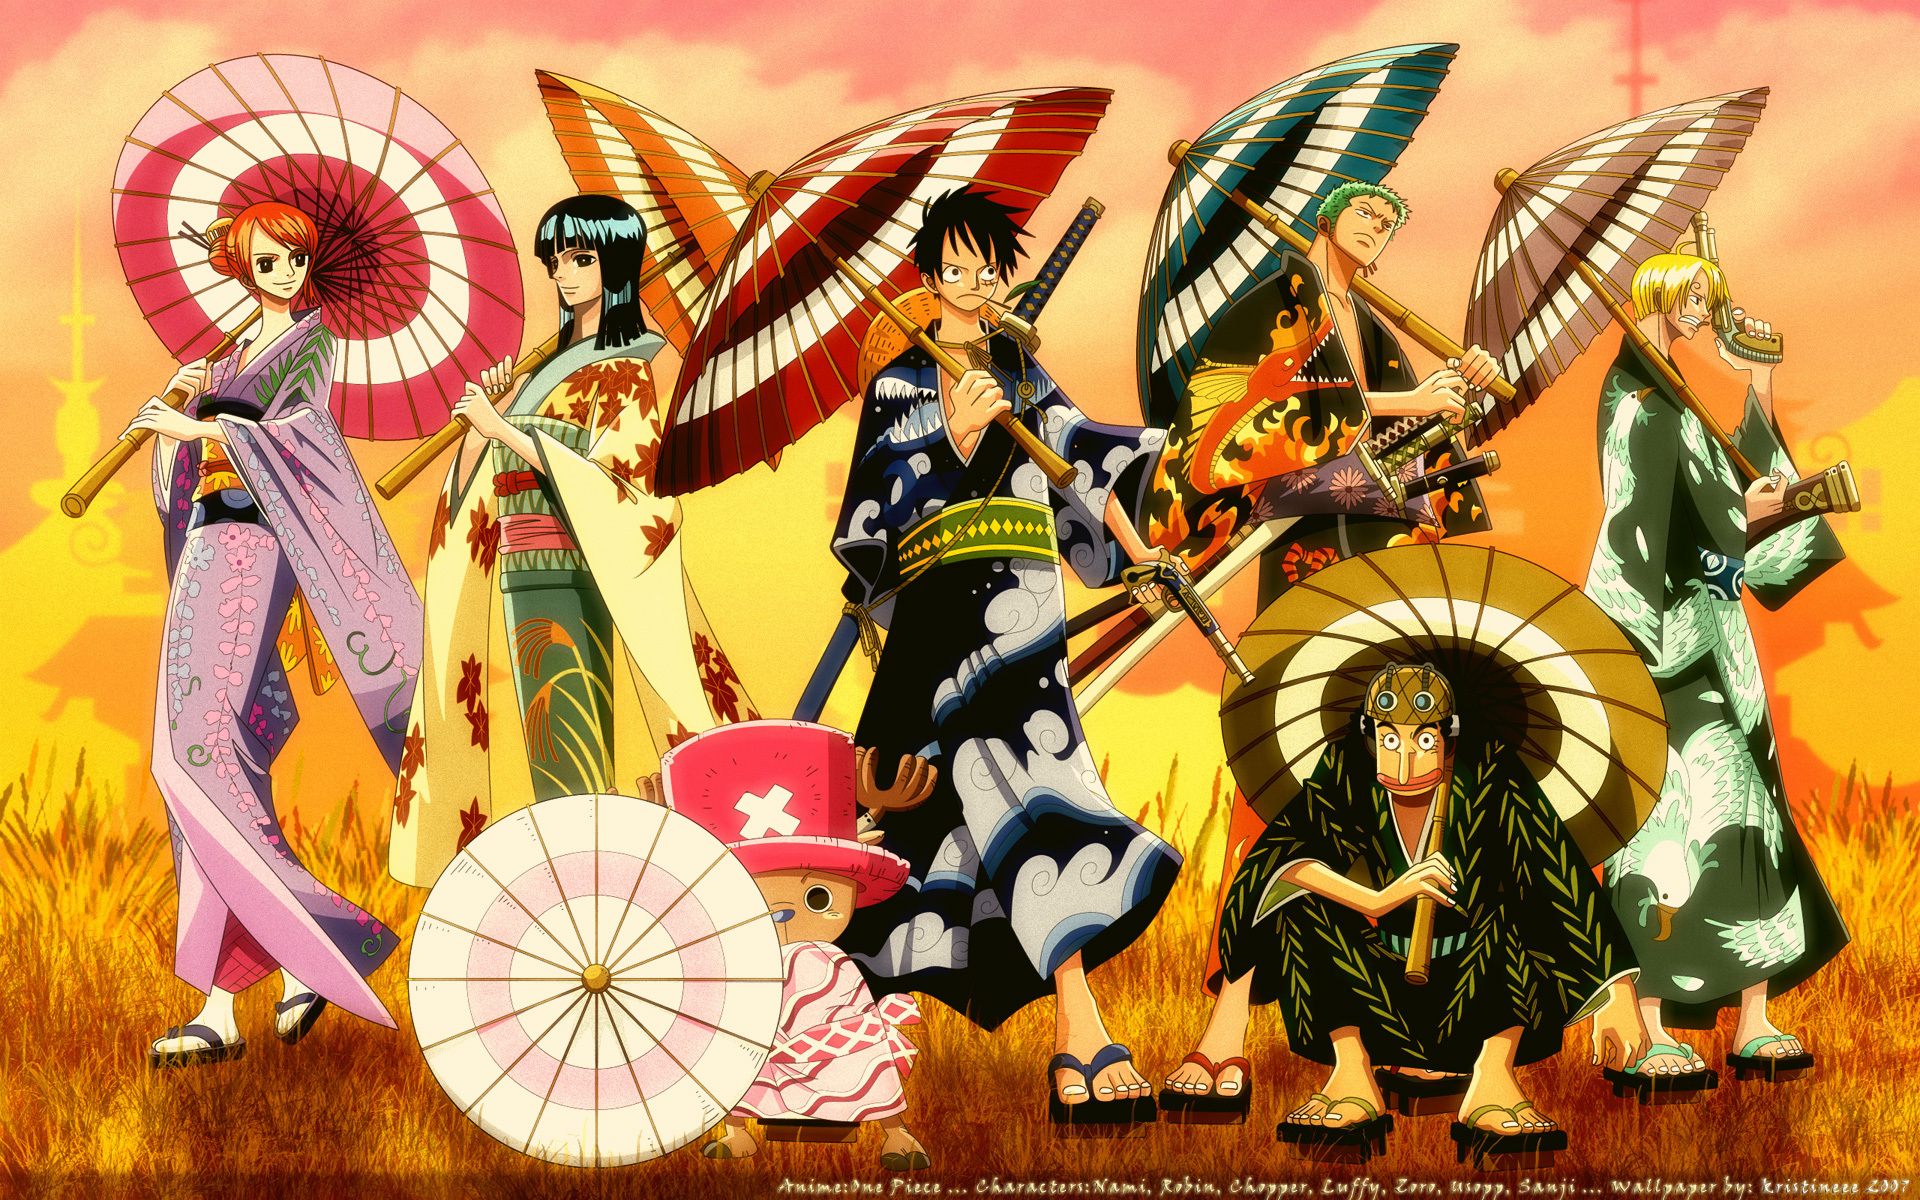 The Best Anime Wallpaper Ever